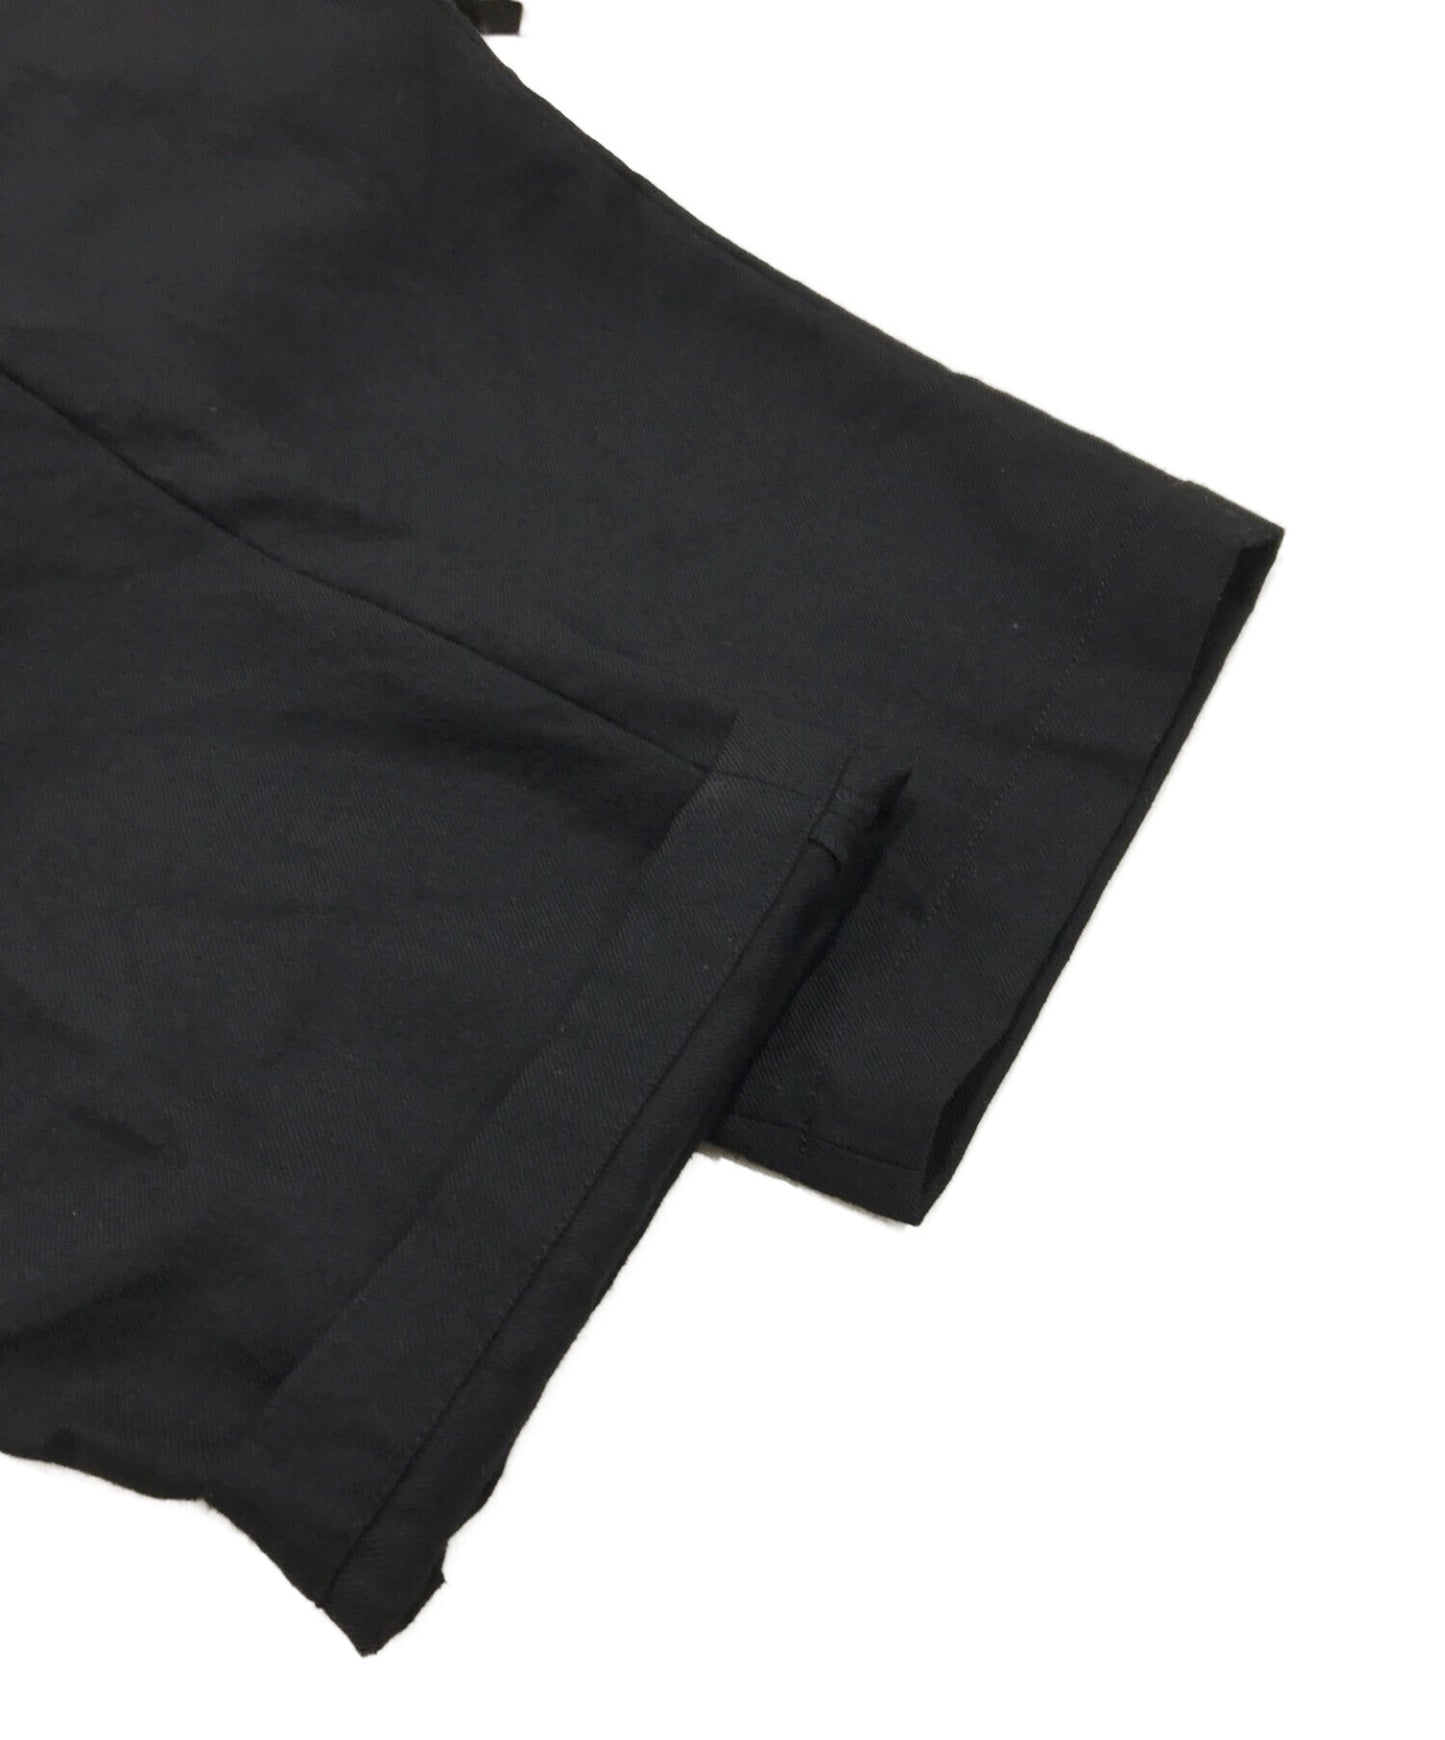 S'yte High-Waist 3-Tuck Wool Pants UV-P59-138